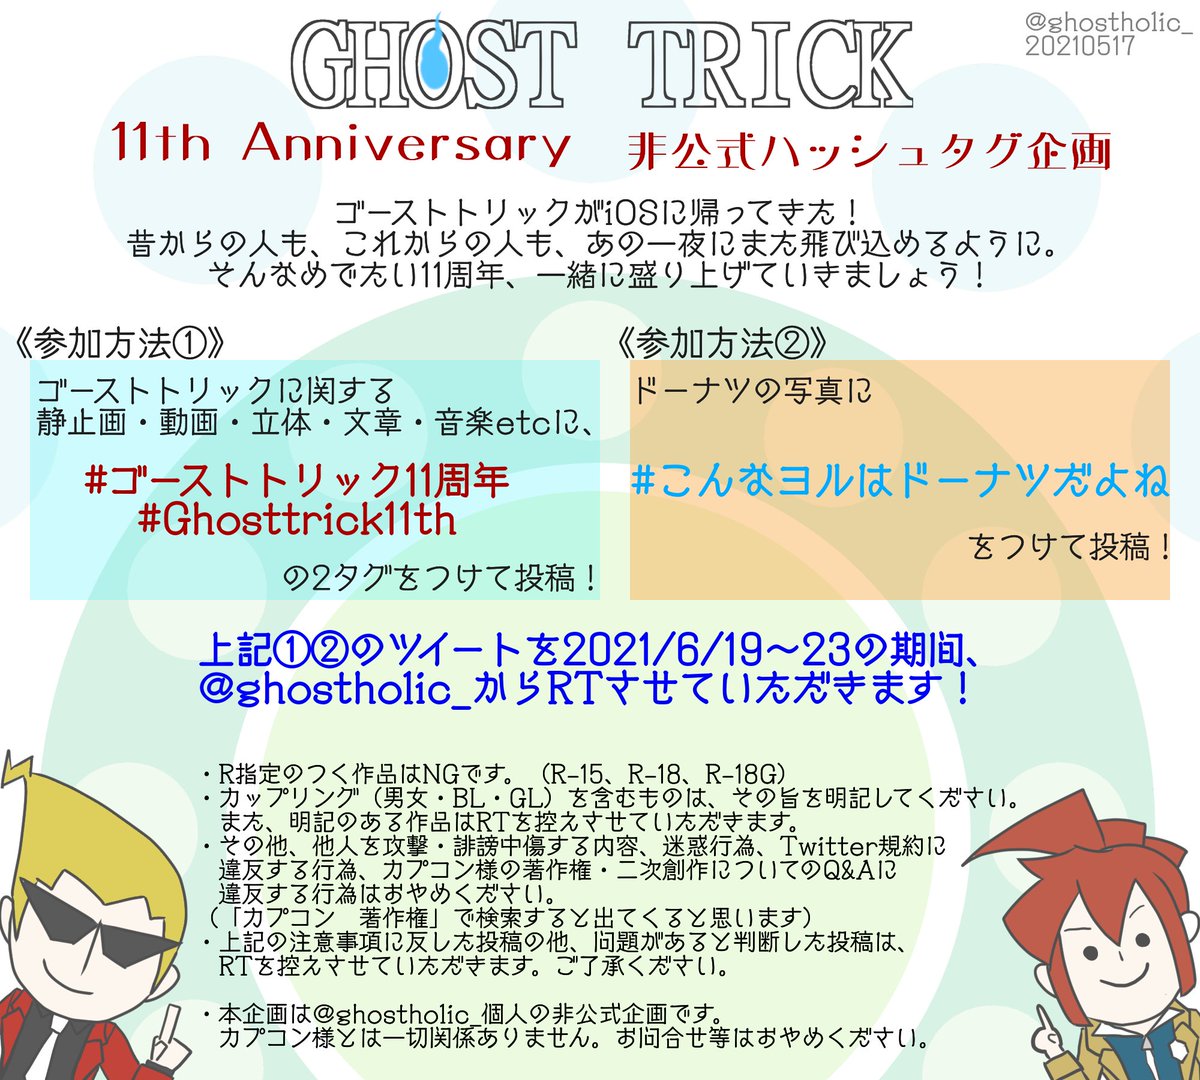 Ghost Holic Ghostholic Twitter